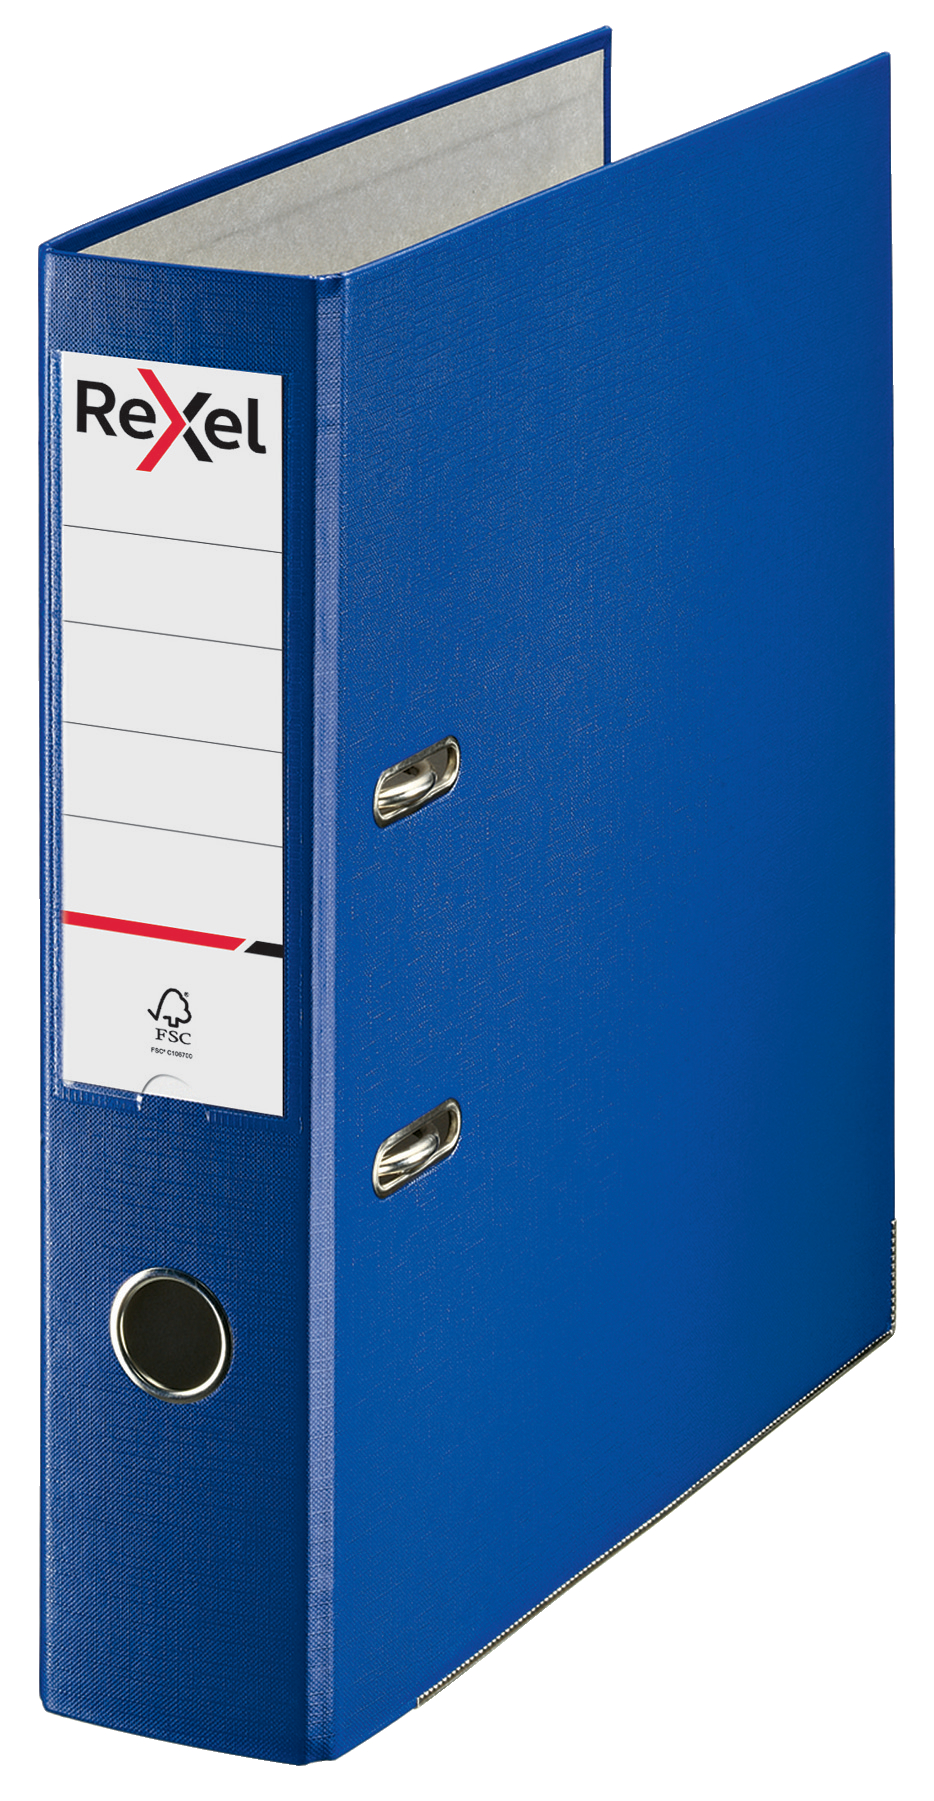 Rexel Lever Arch File Polypropylene ECO A4 75mm Blue (Box 10) 2115714x10